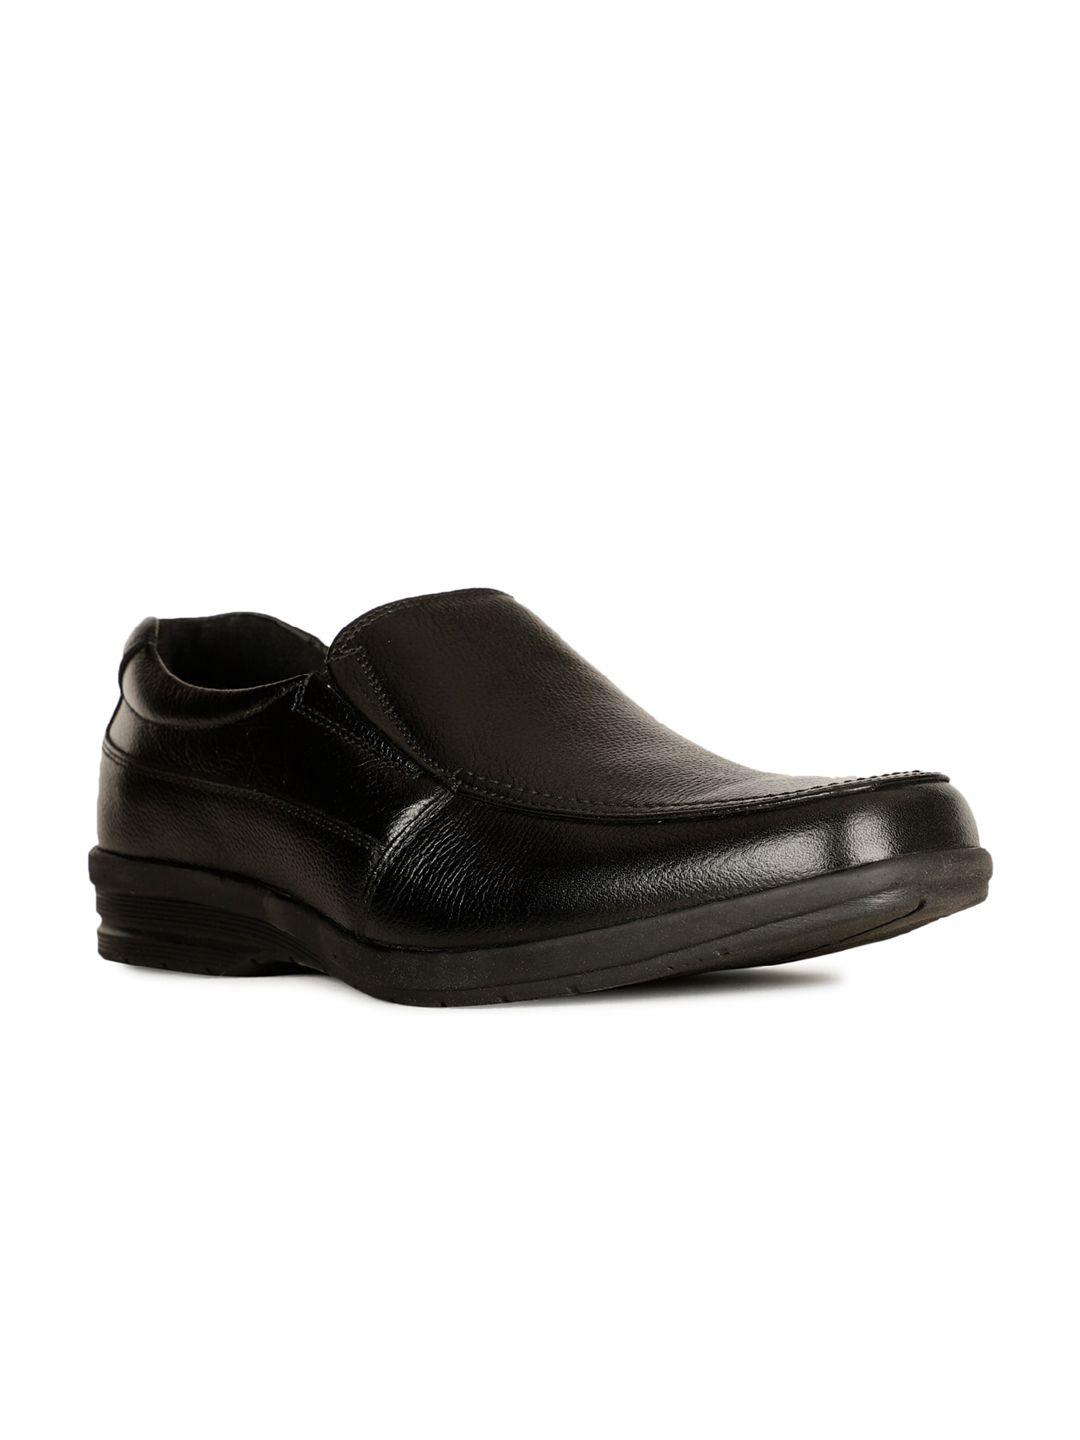 bata men textured leather formal slip-on shoes